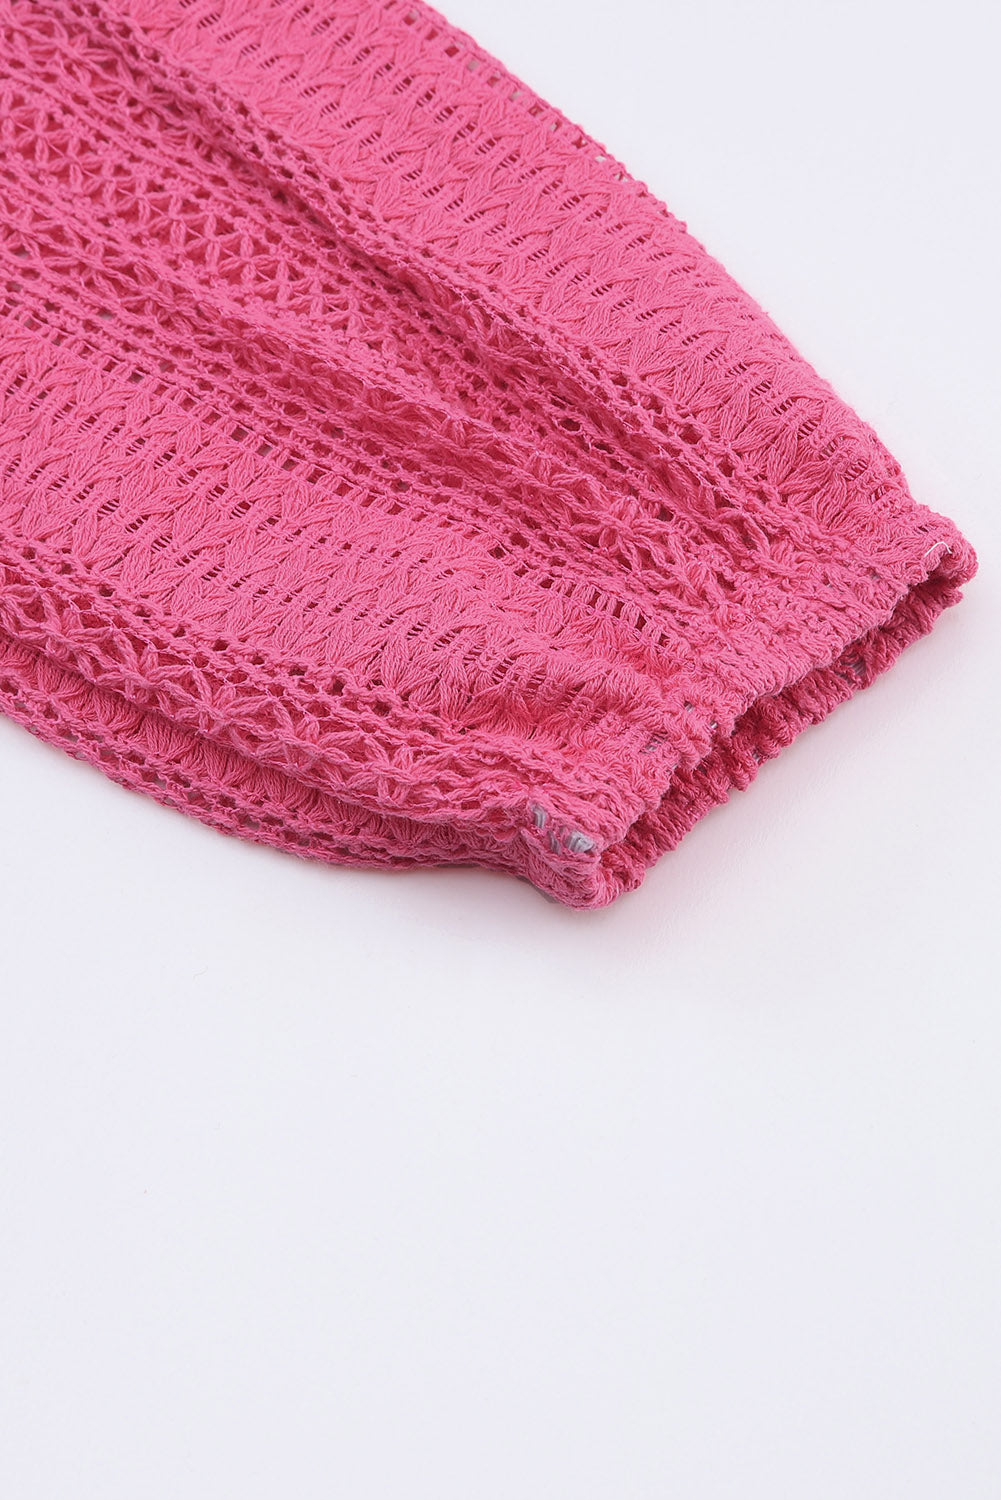 Raglan Sleeve Crochet Top